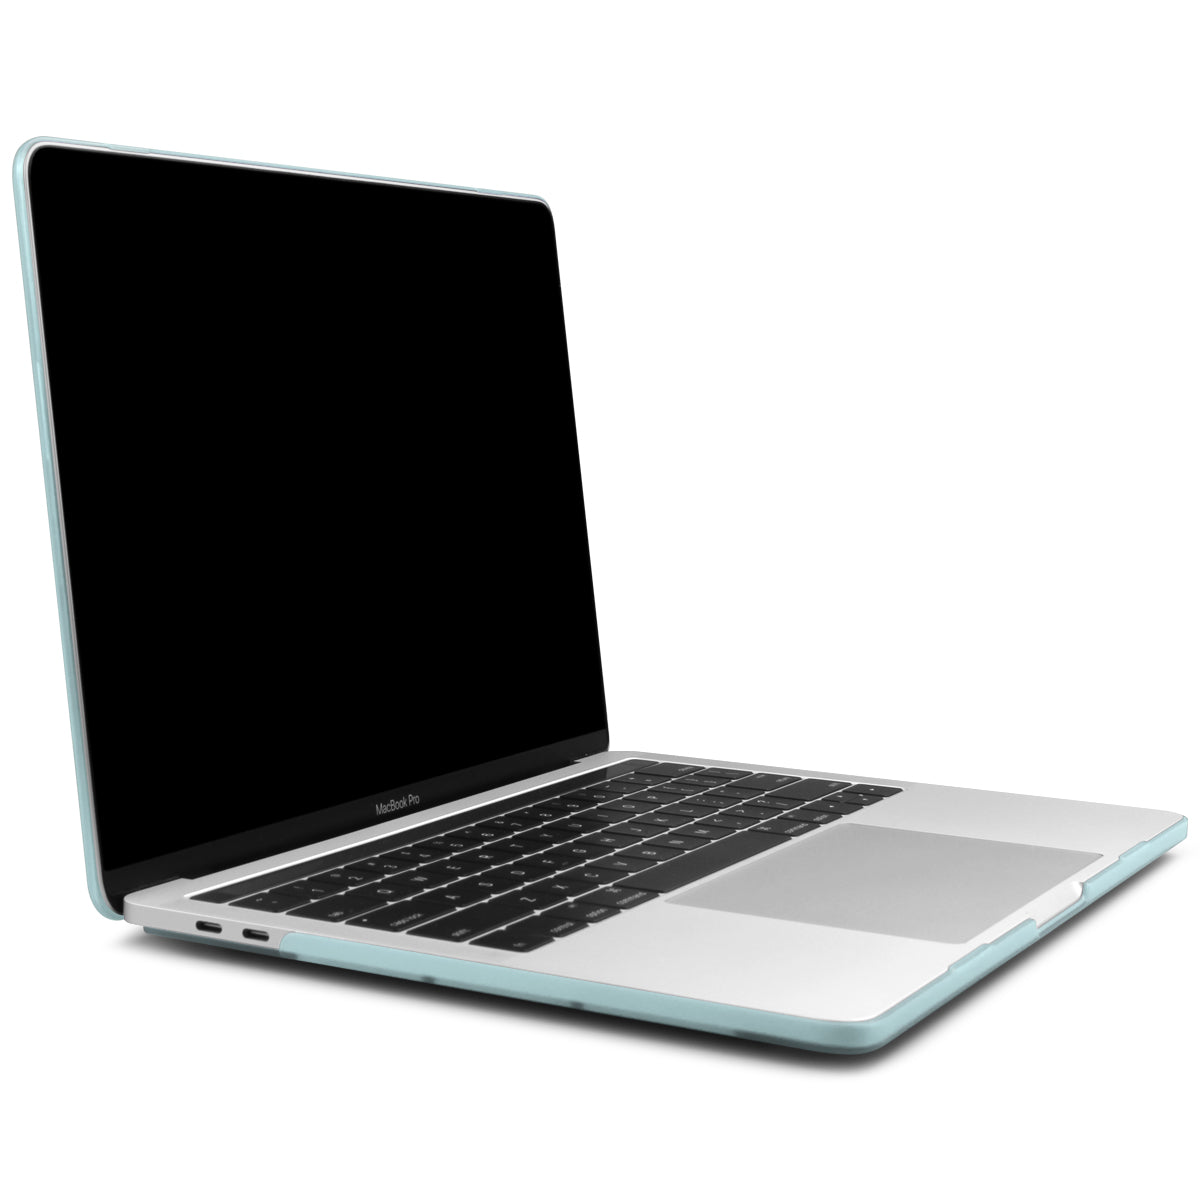 Best Mint Green Macbook Case